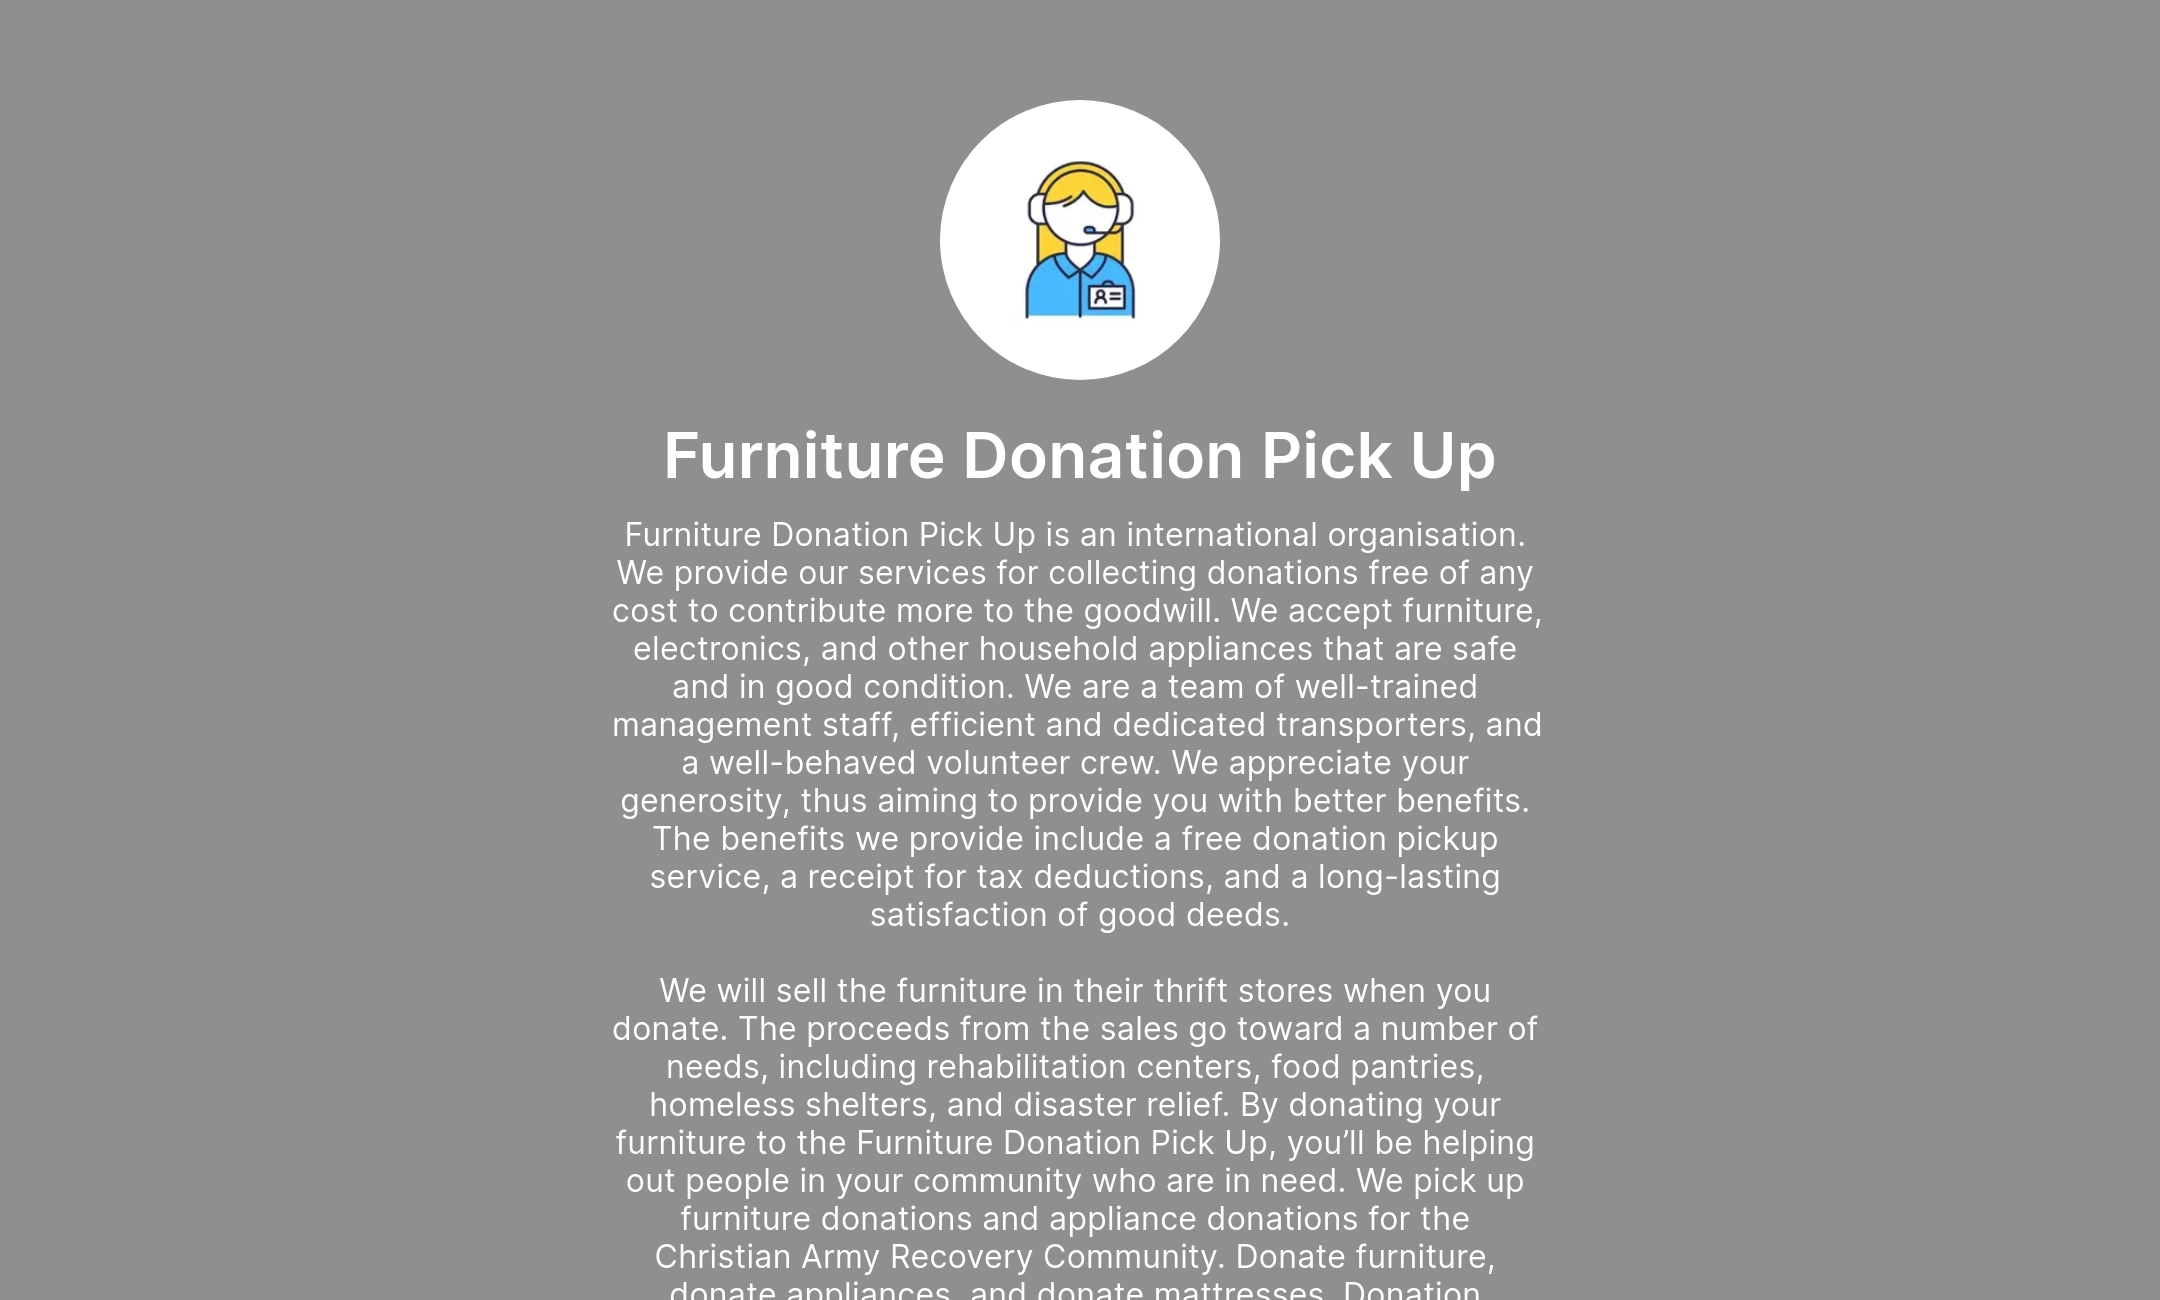 donation pickup beds mattresses desks